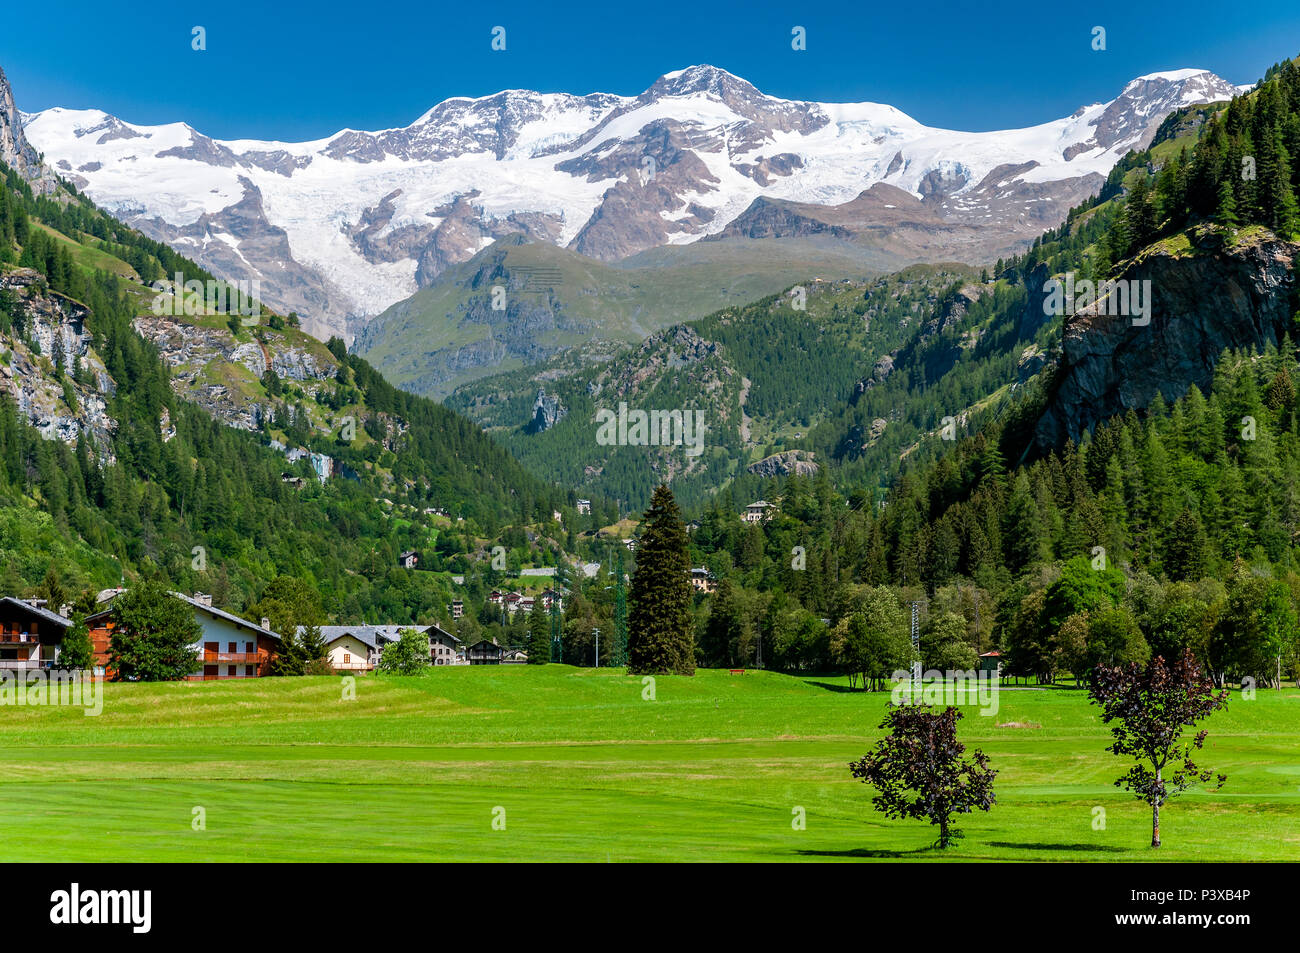 Summer view of Monte Rosa, Gressoney La Trinite, Aosta Valley, Italy Stock Photo